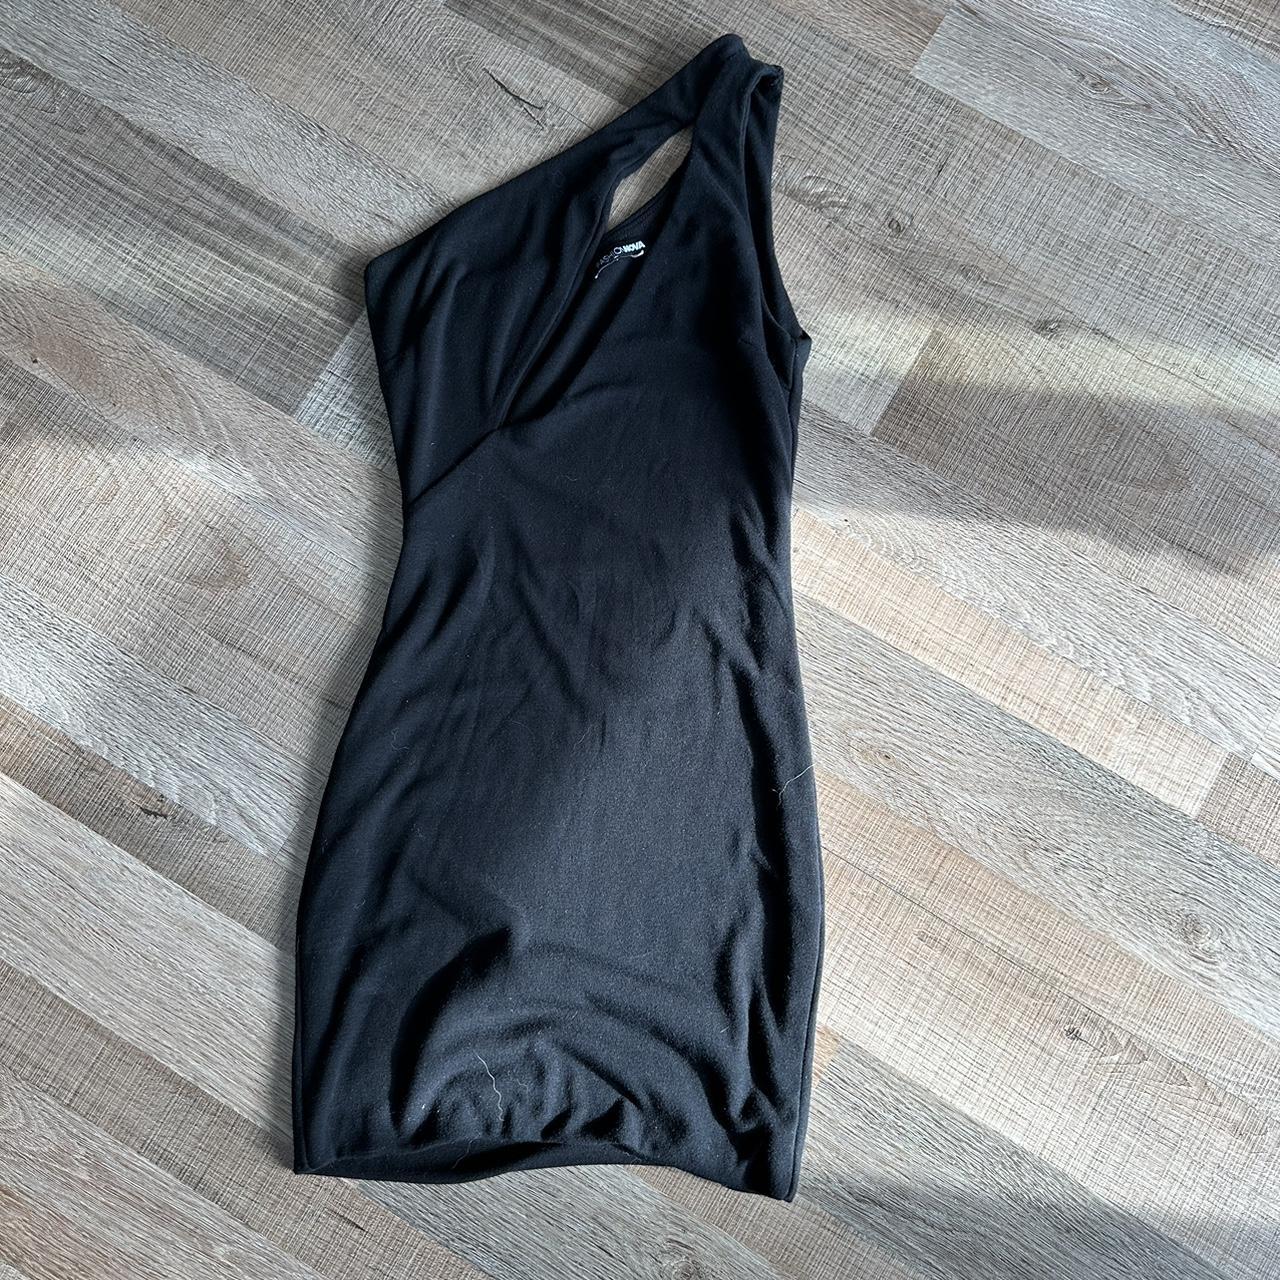 Black dress cutout - Depop